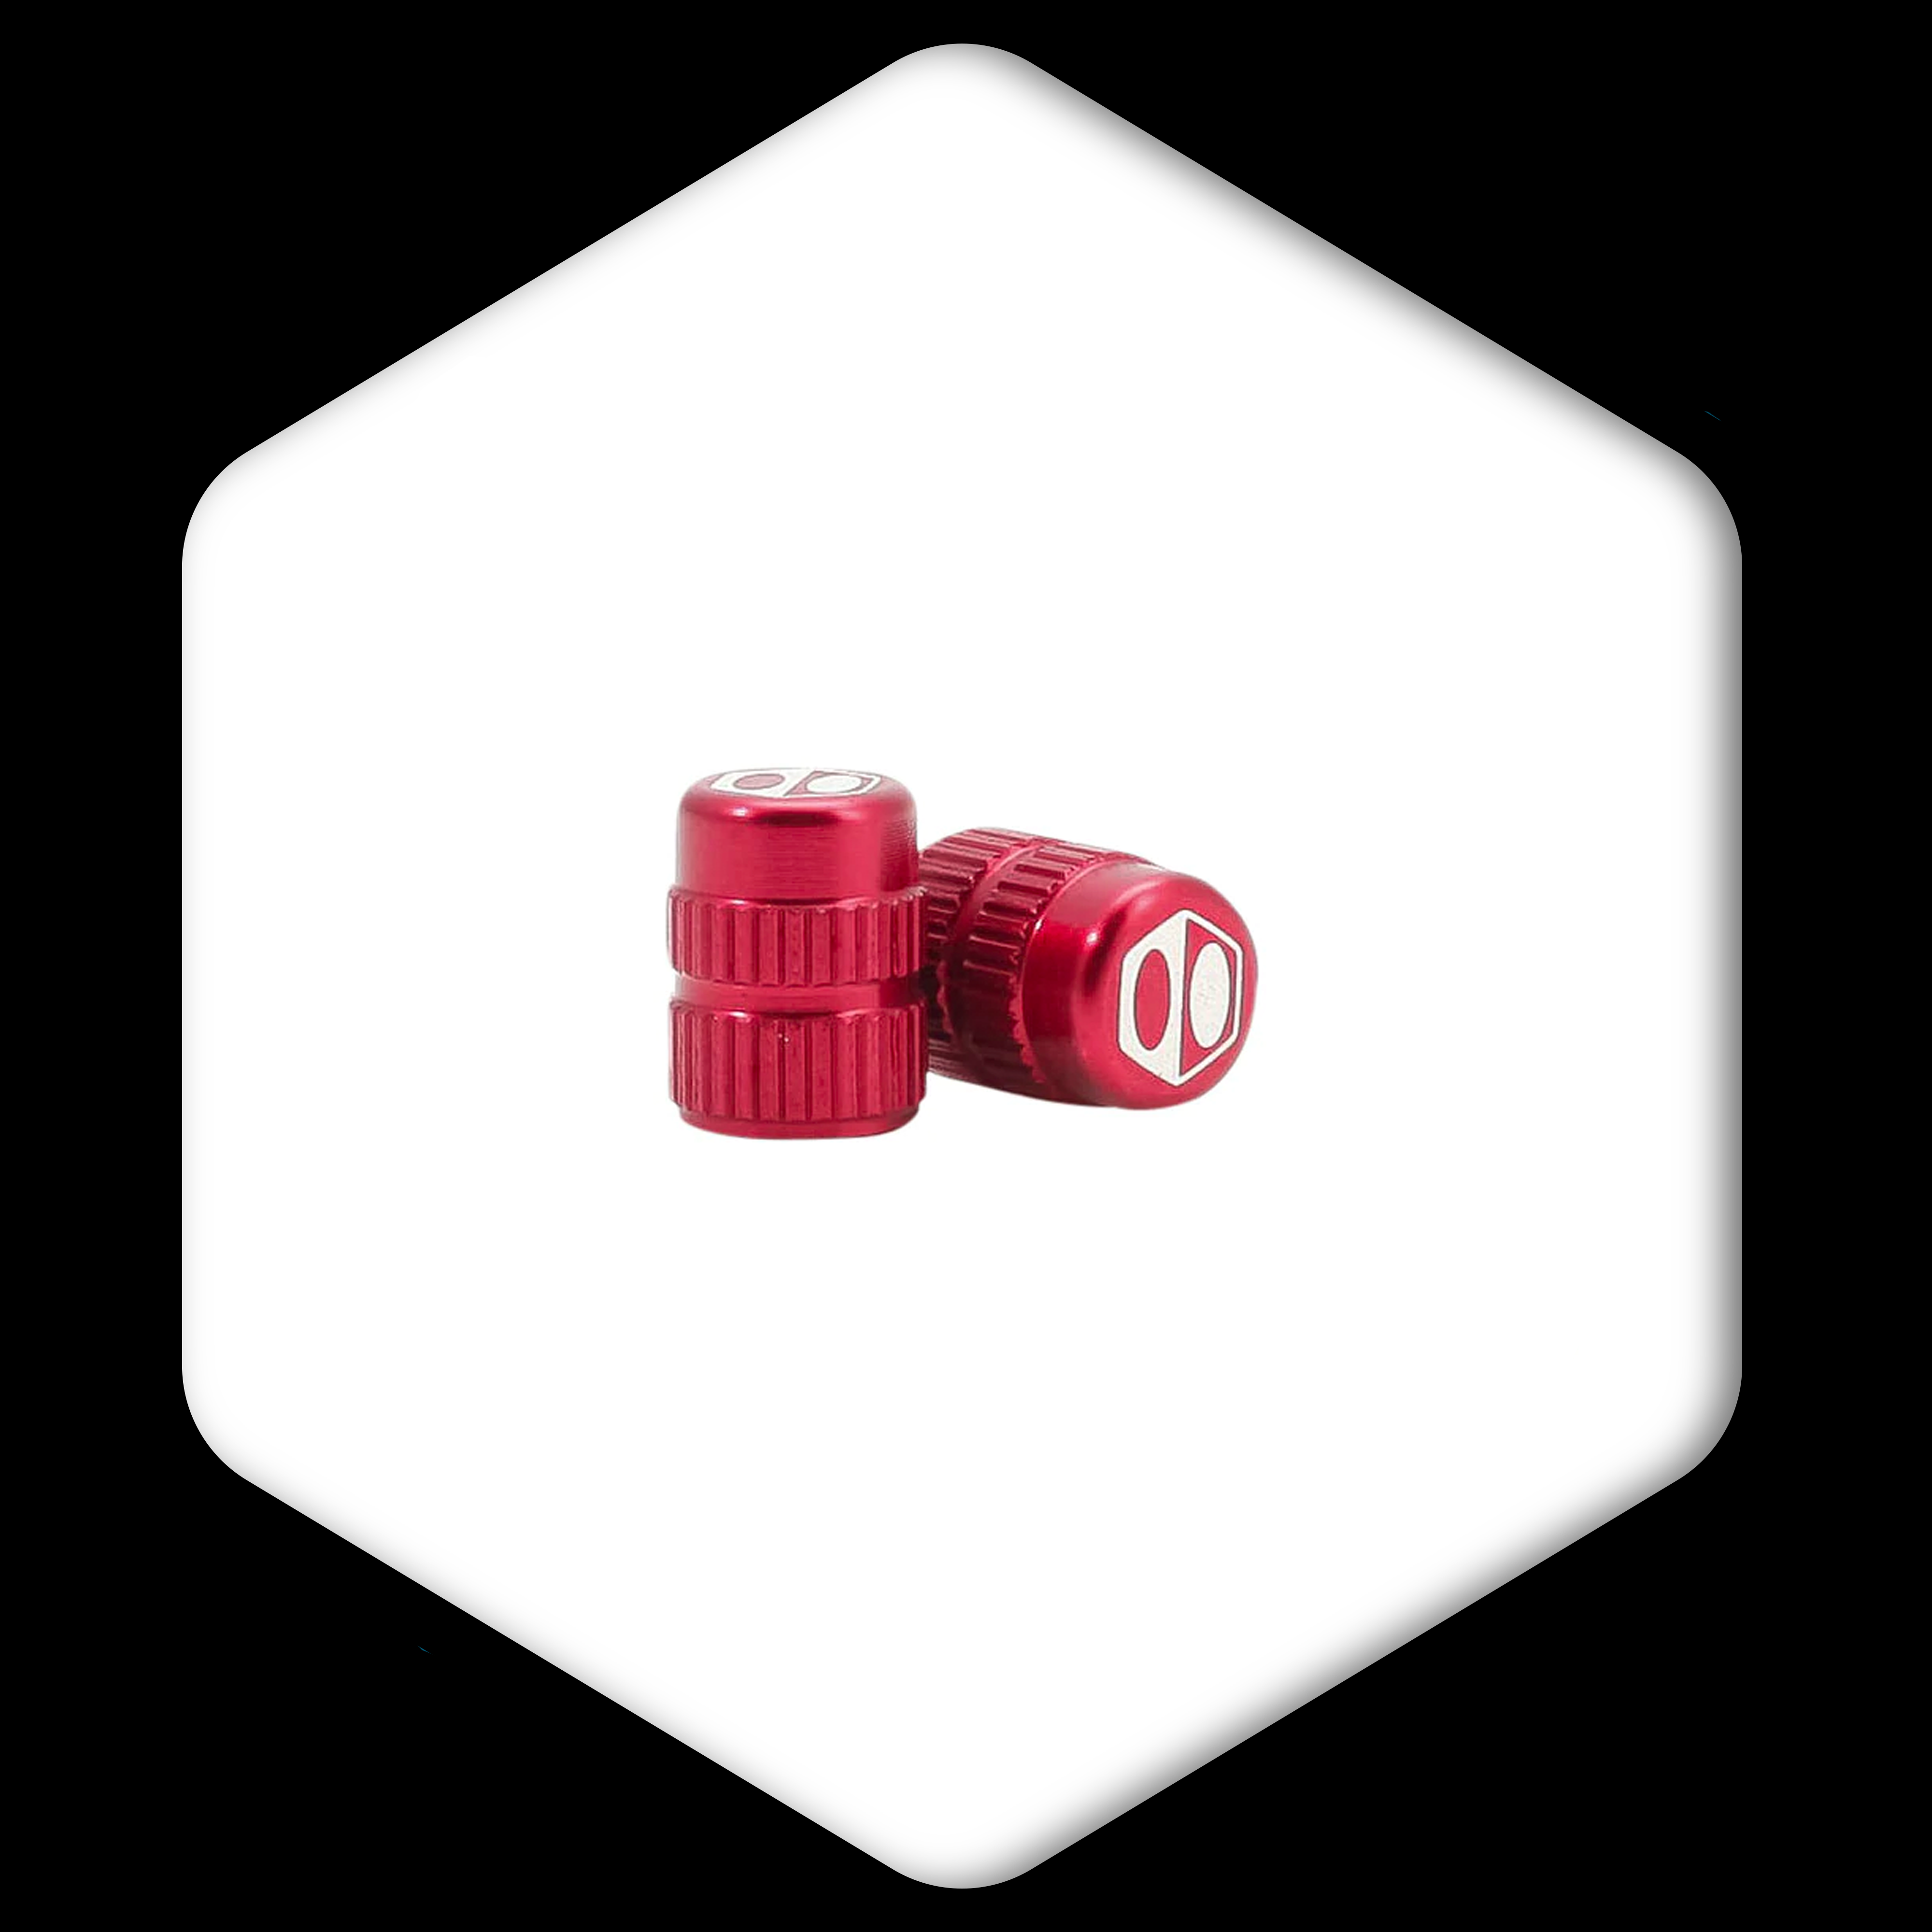 Box One Cube schrader valve caps